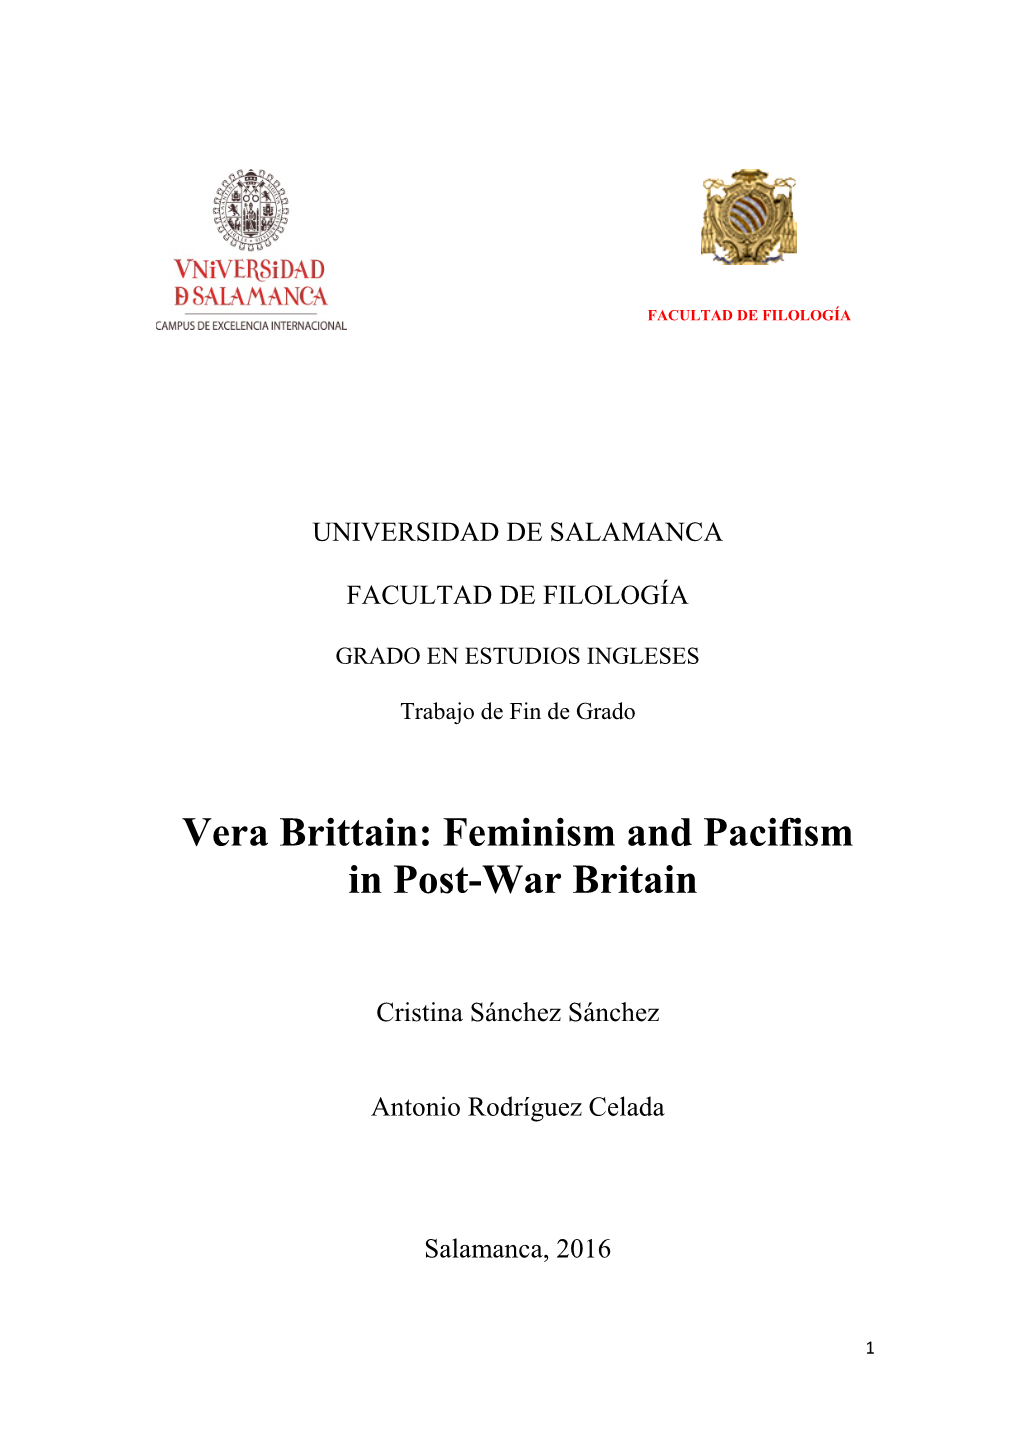 Vera Brittain: Feminism and Pacifism in Post-War Britain